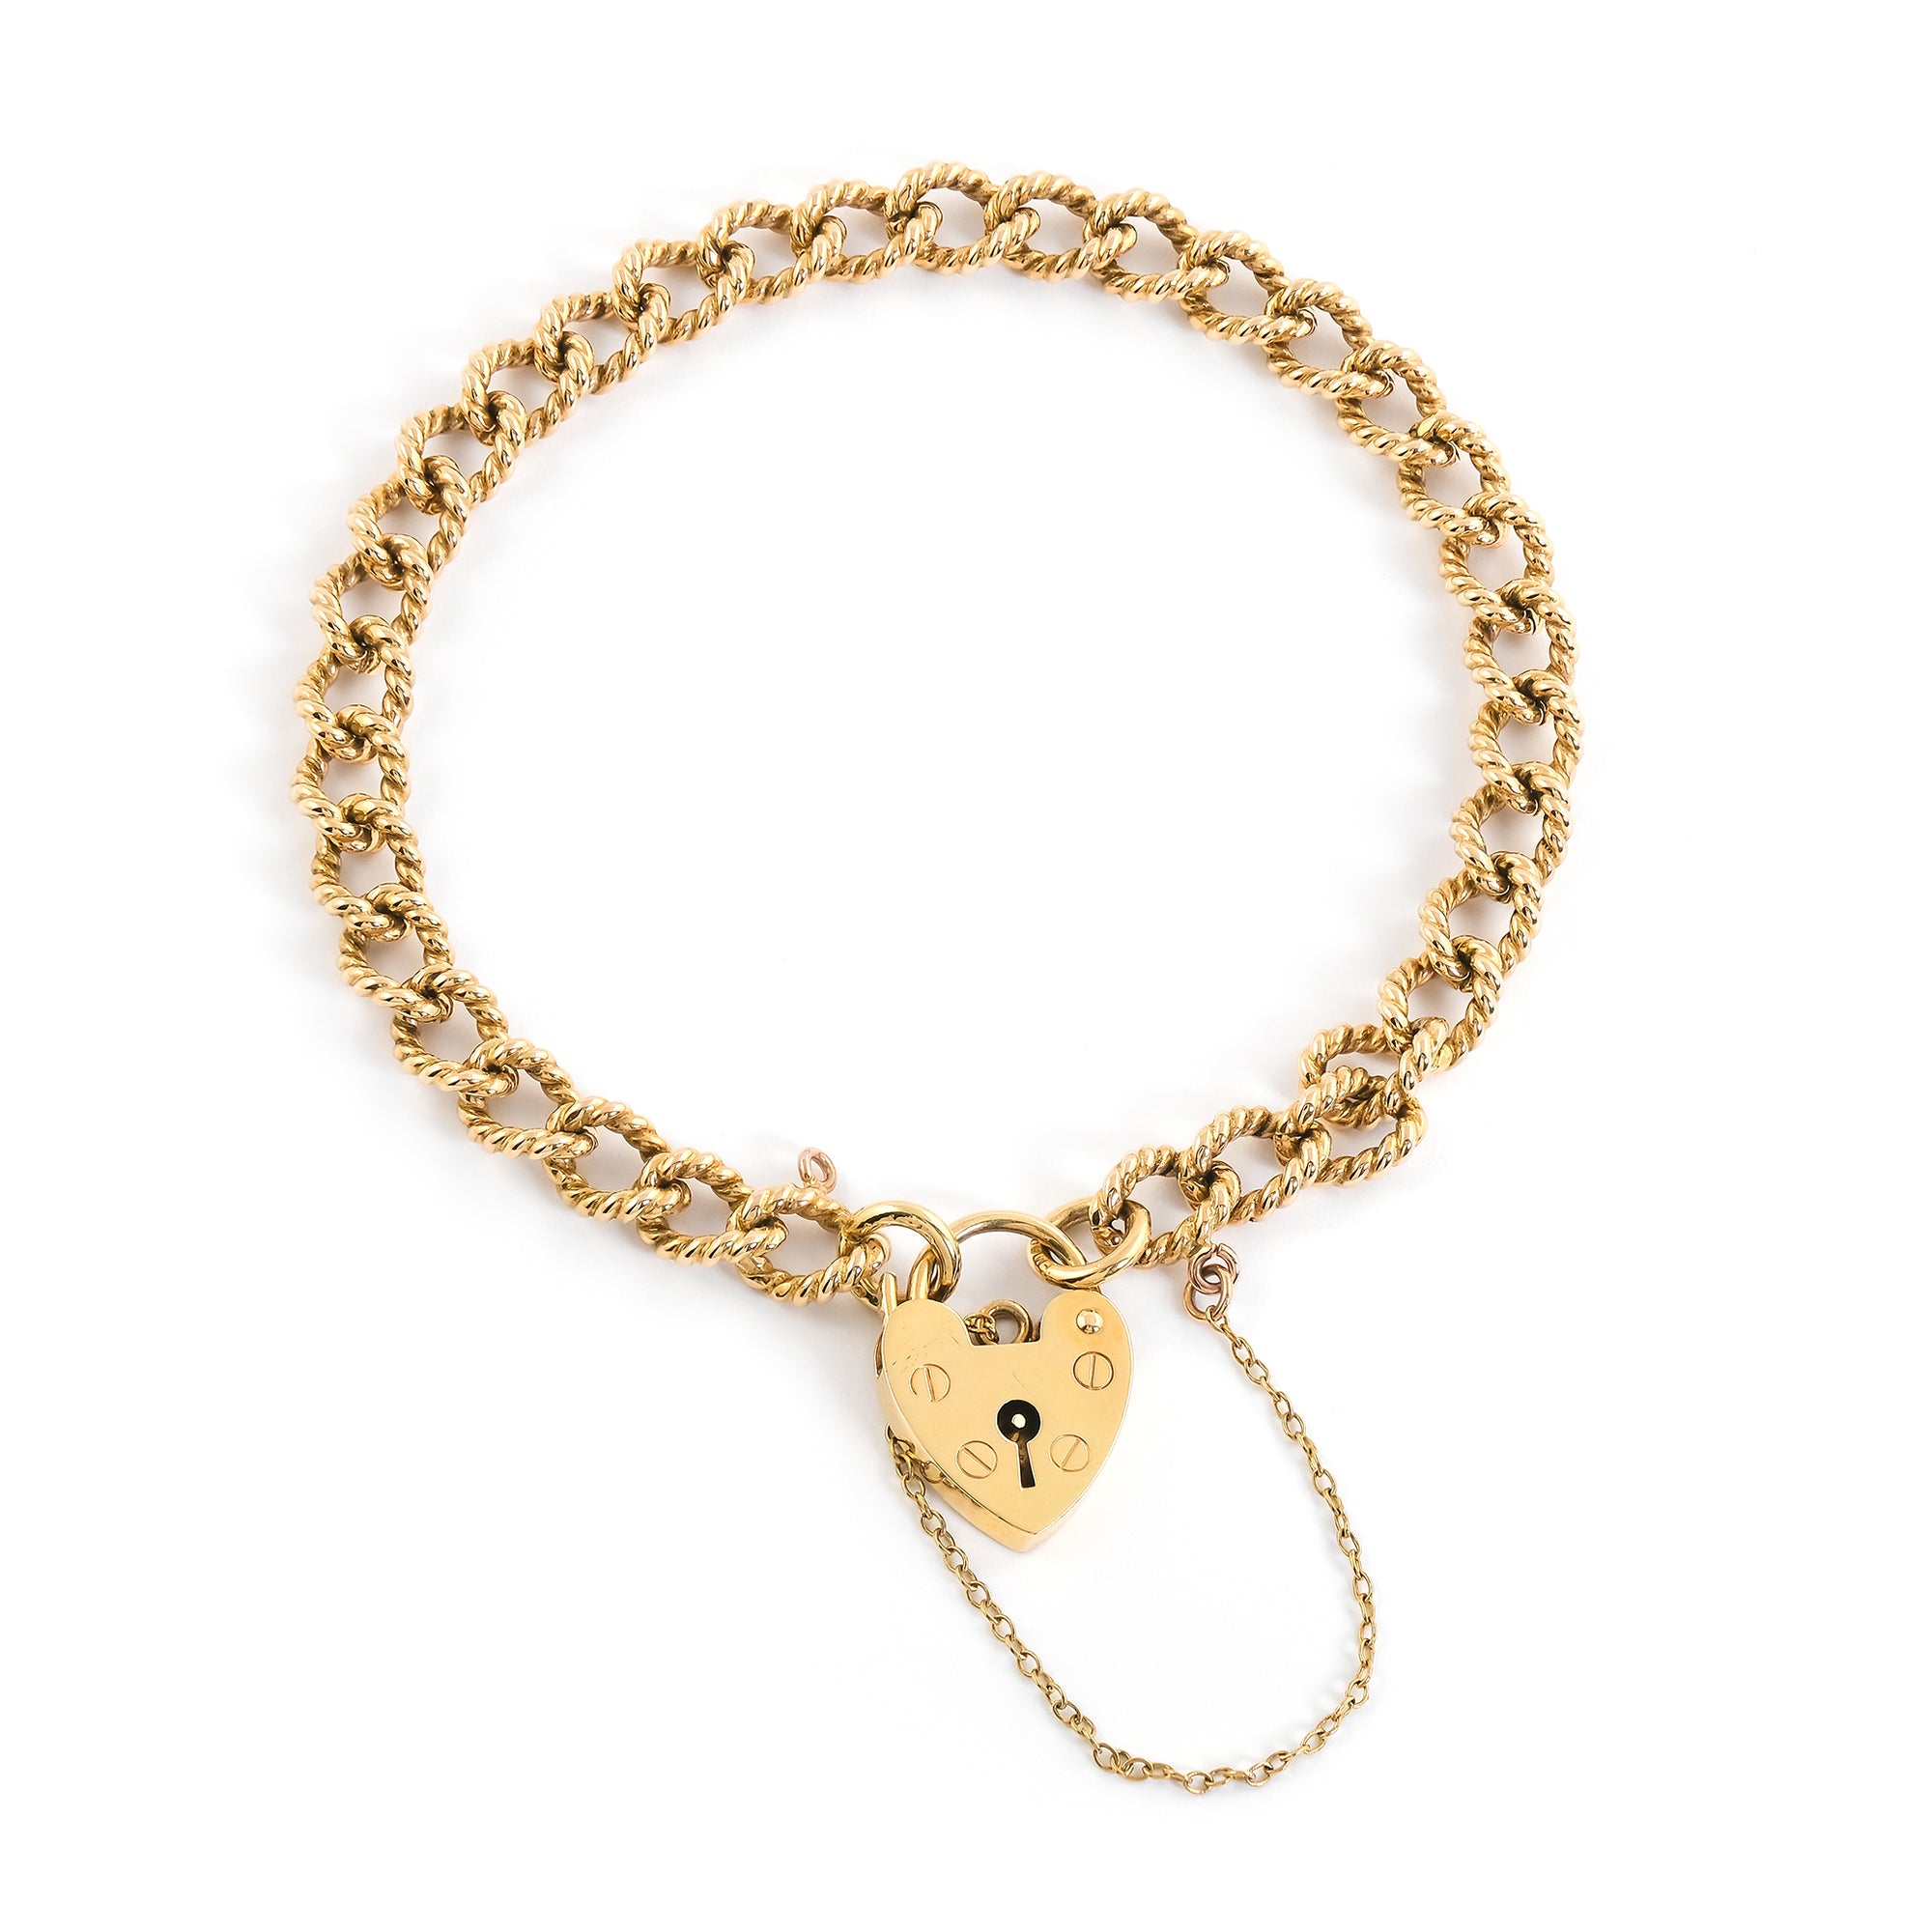 Vintage 9ct Yellow Gold Heart Lock Bracelet